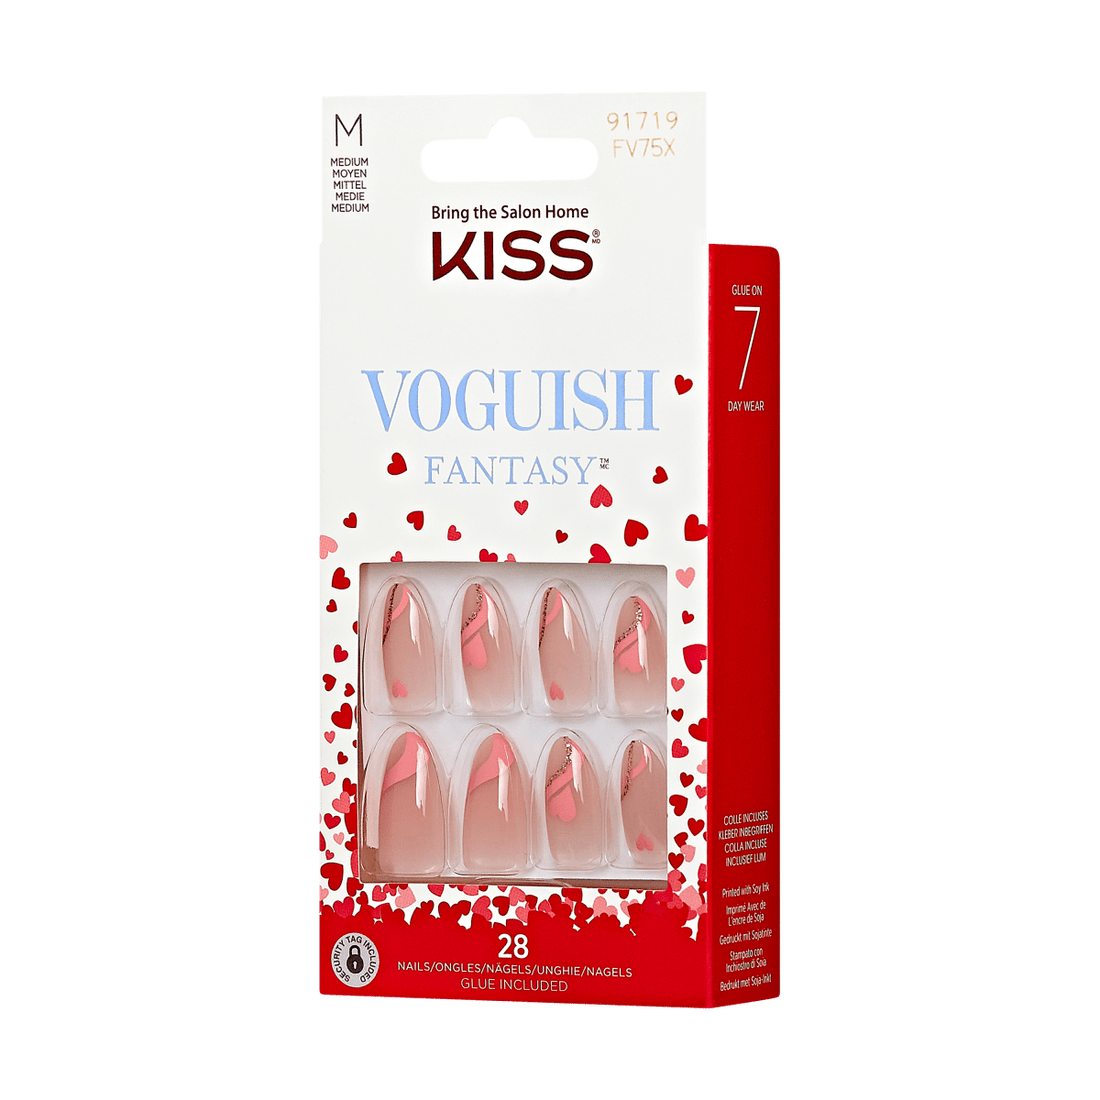 KISS Voguish Fantasy, Press-On Nails, My Valentine, Pink, Med Almond, 28ct